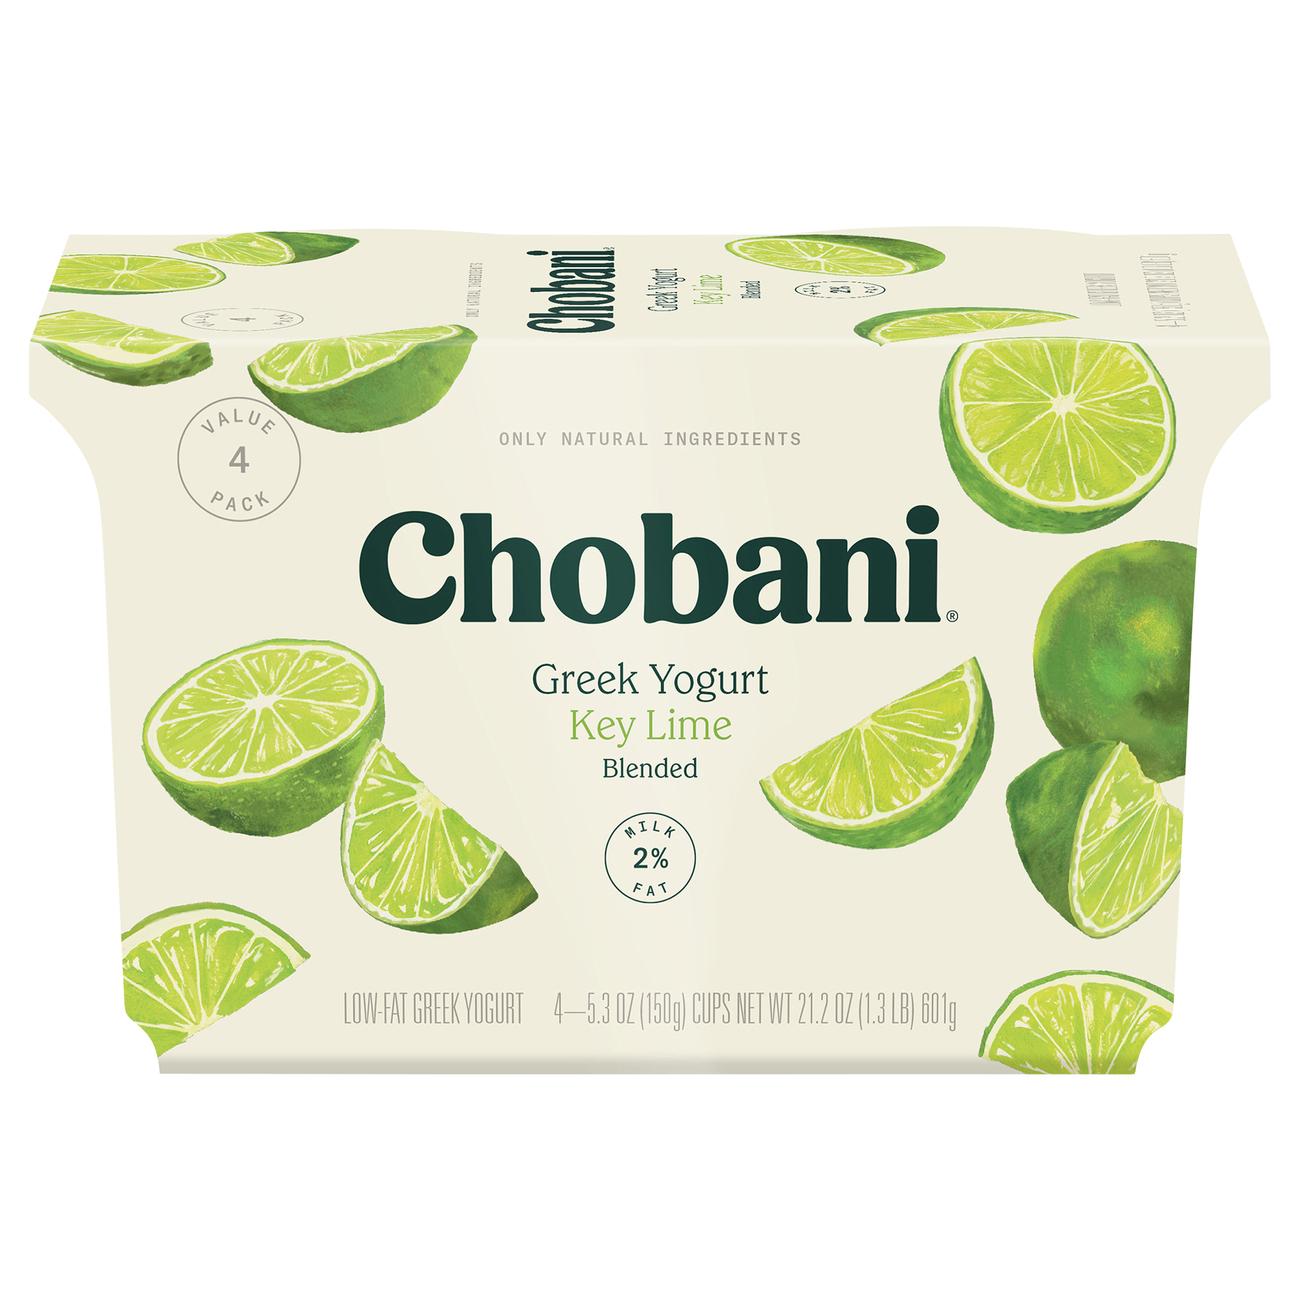 Chobani Low-Fat Key Lime Blended Greek Yogurt; image 1 of 5